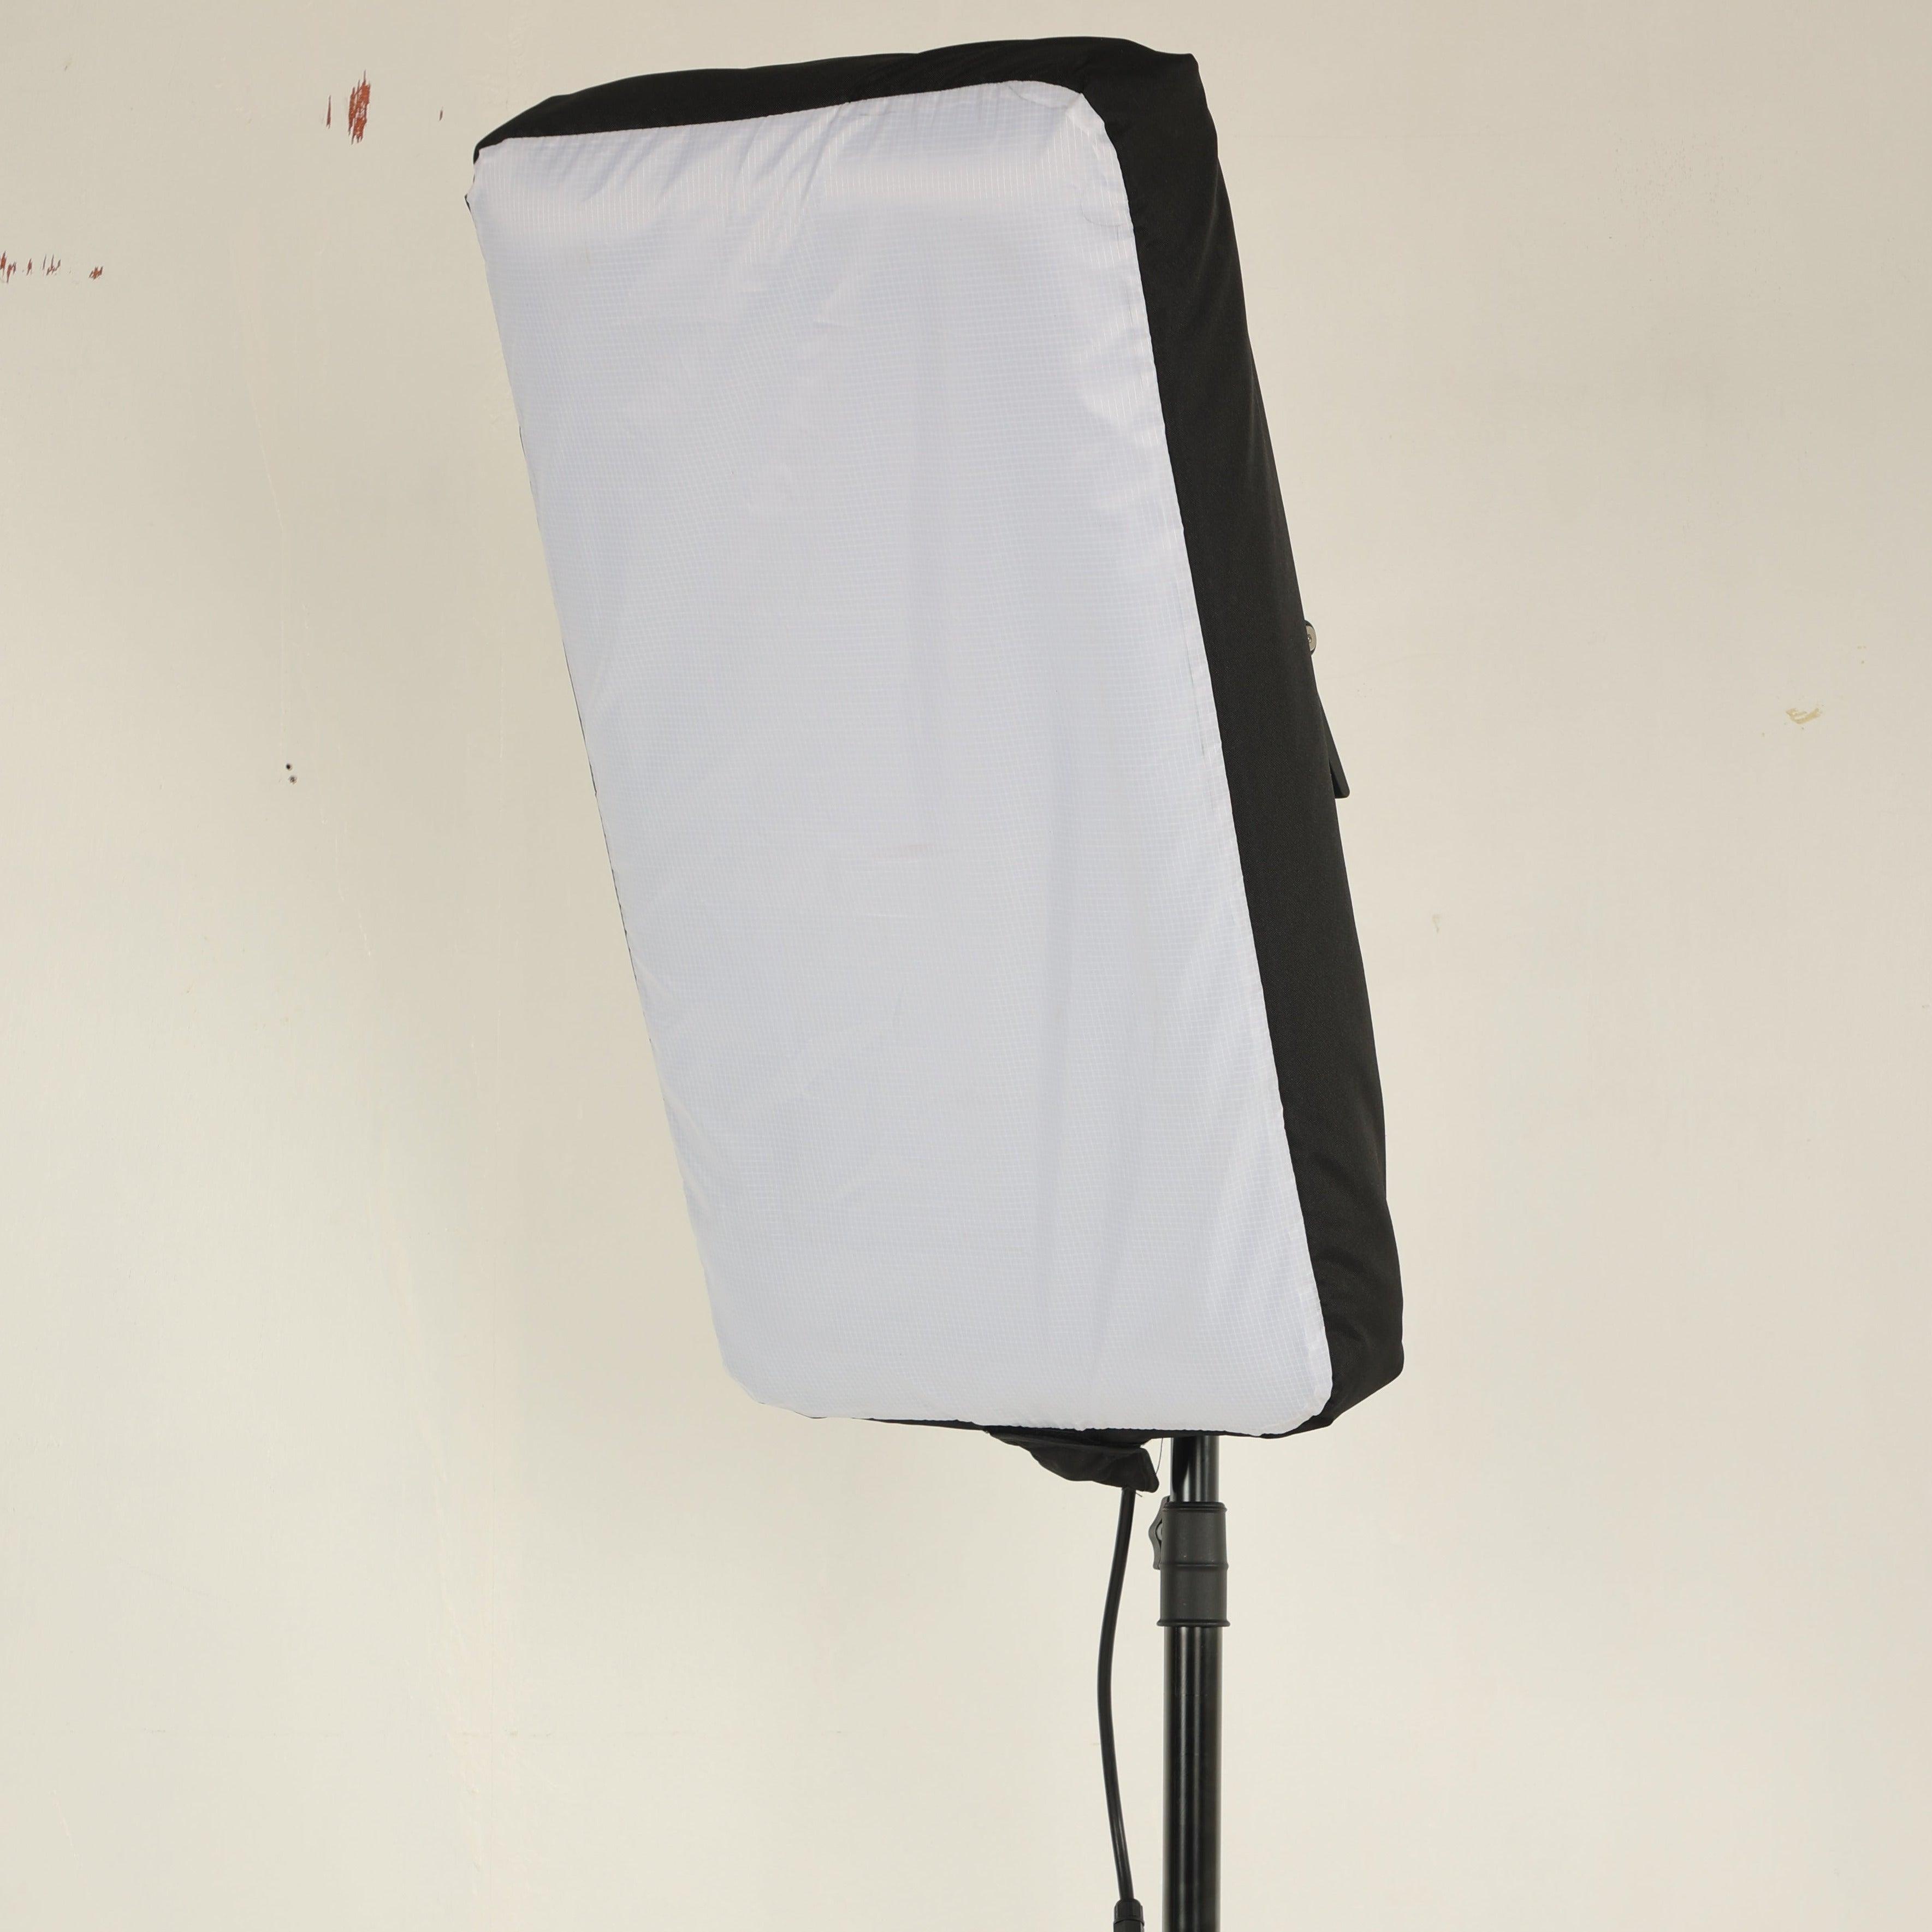 Aparo Radi 12 Pro Air LED RGBCW Panel Flex Light